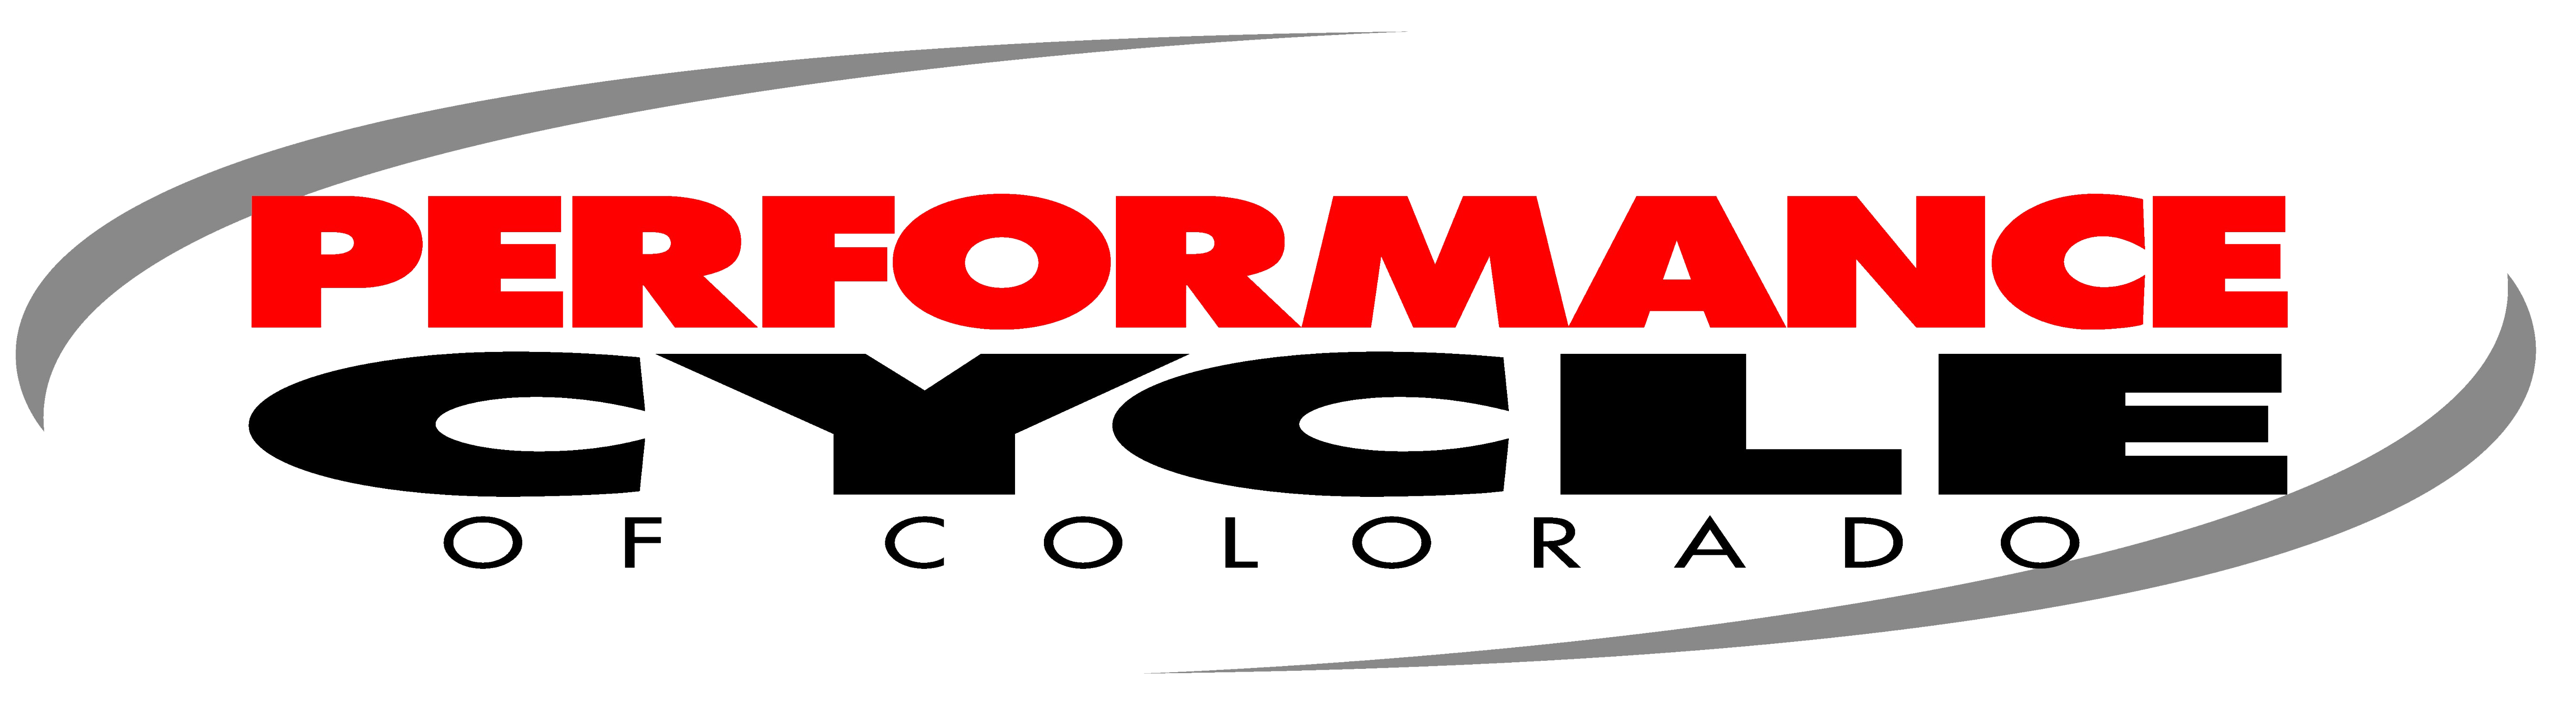 Performance Cycle of Colorado logo